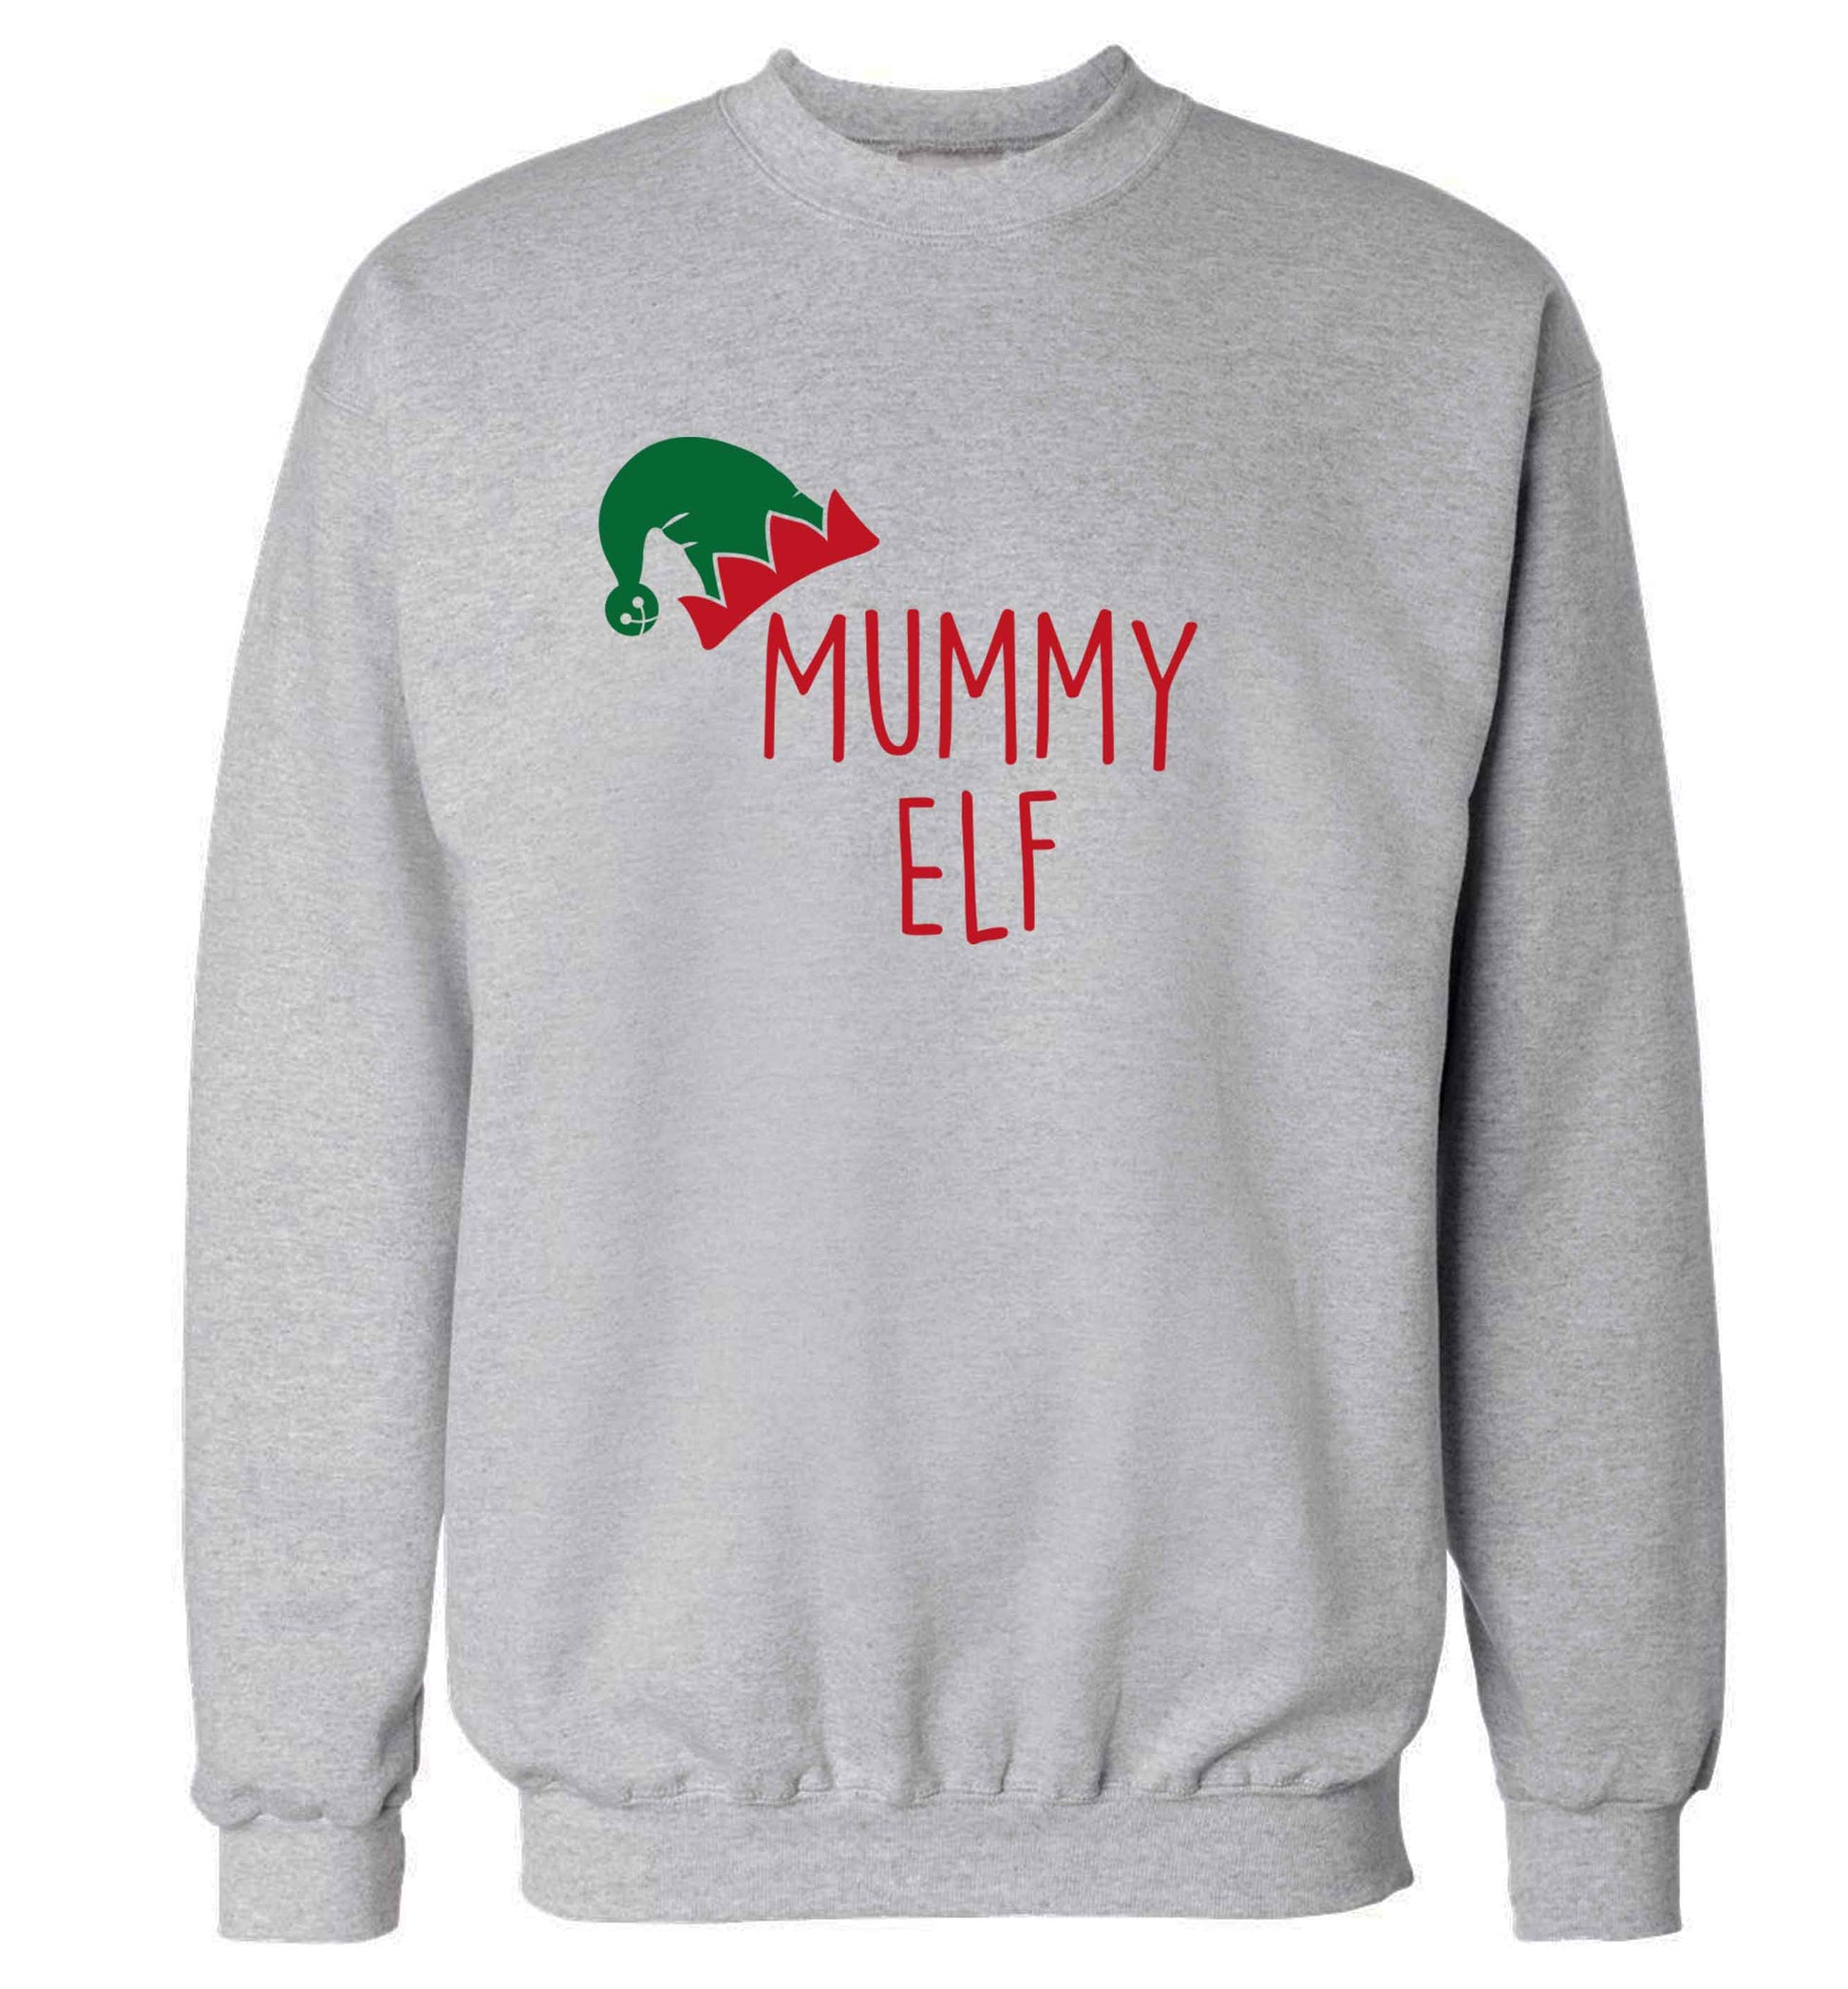 Mummy elf adult's unisex grey sweater 2XL